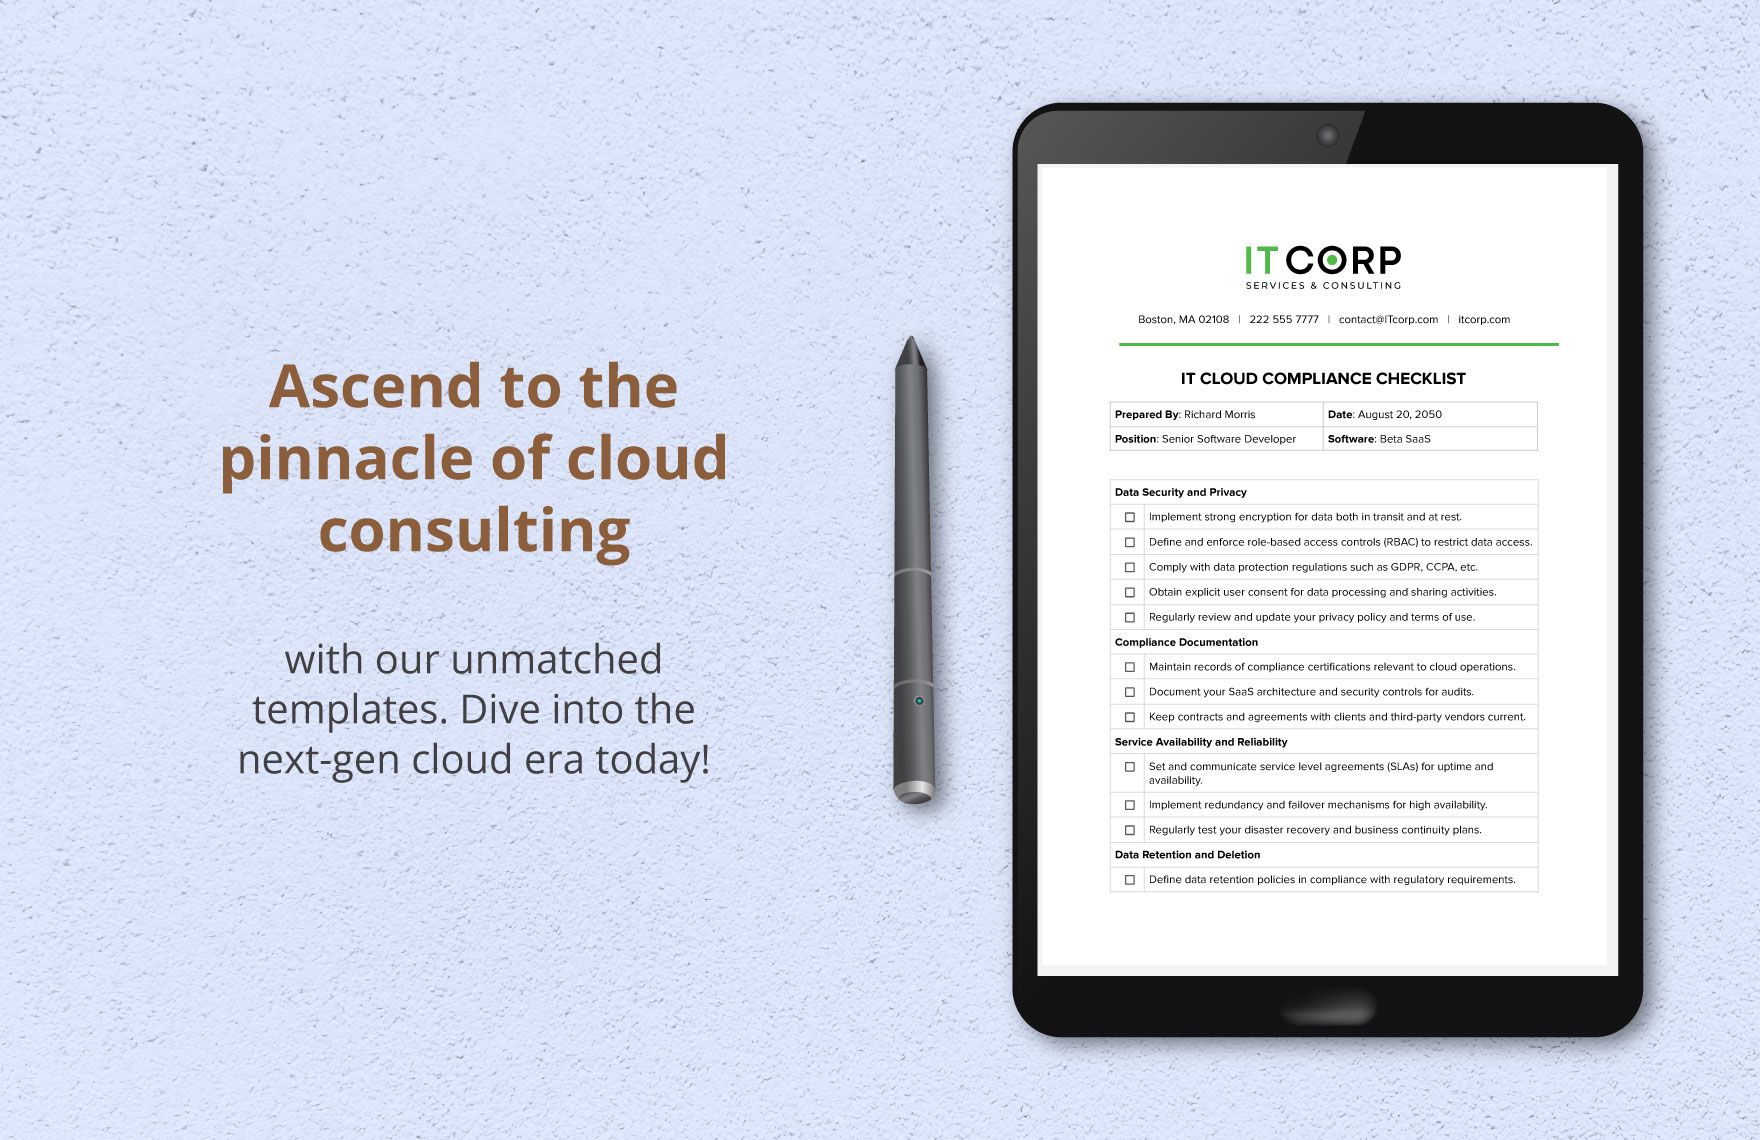 IT Cloud Compliance Checklist Template